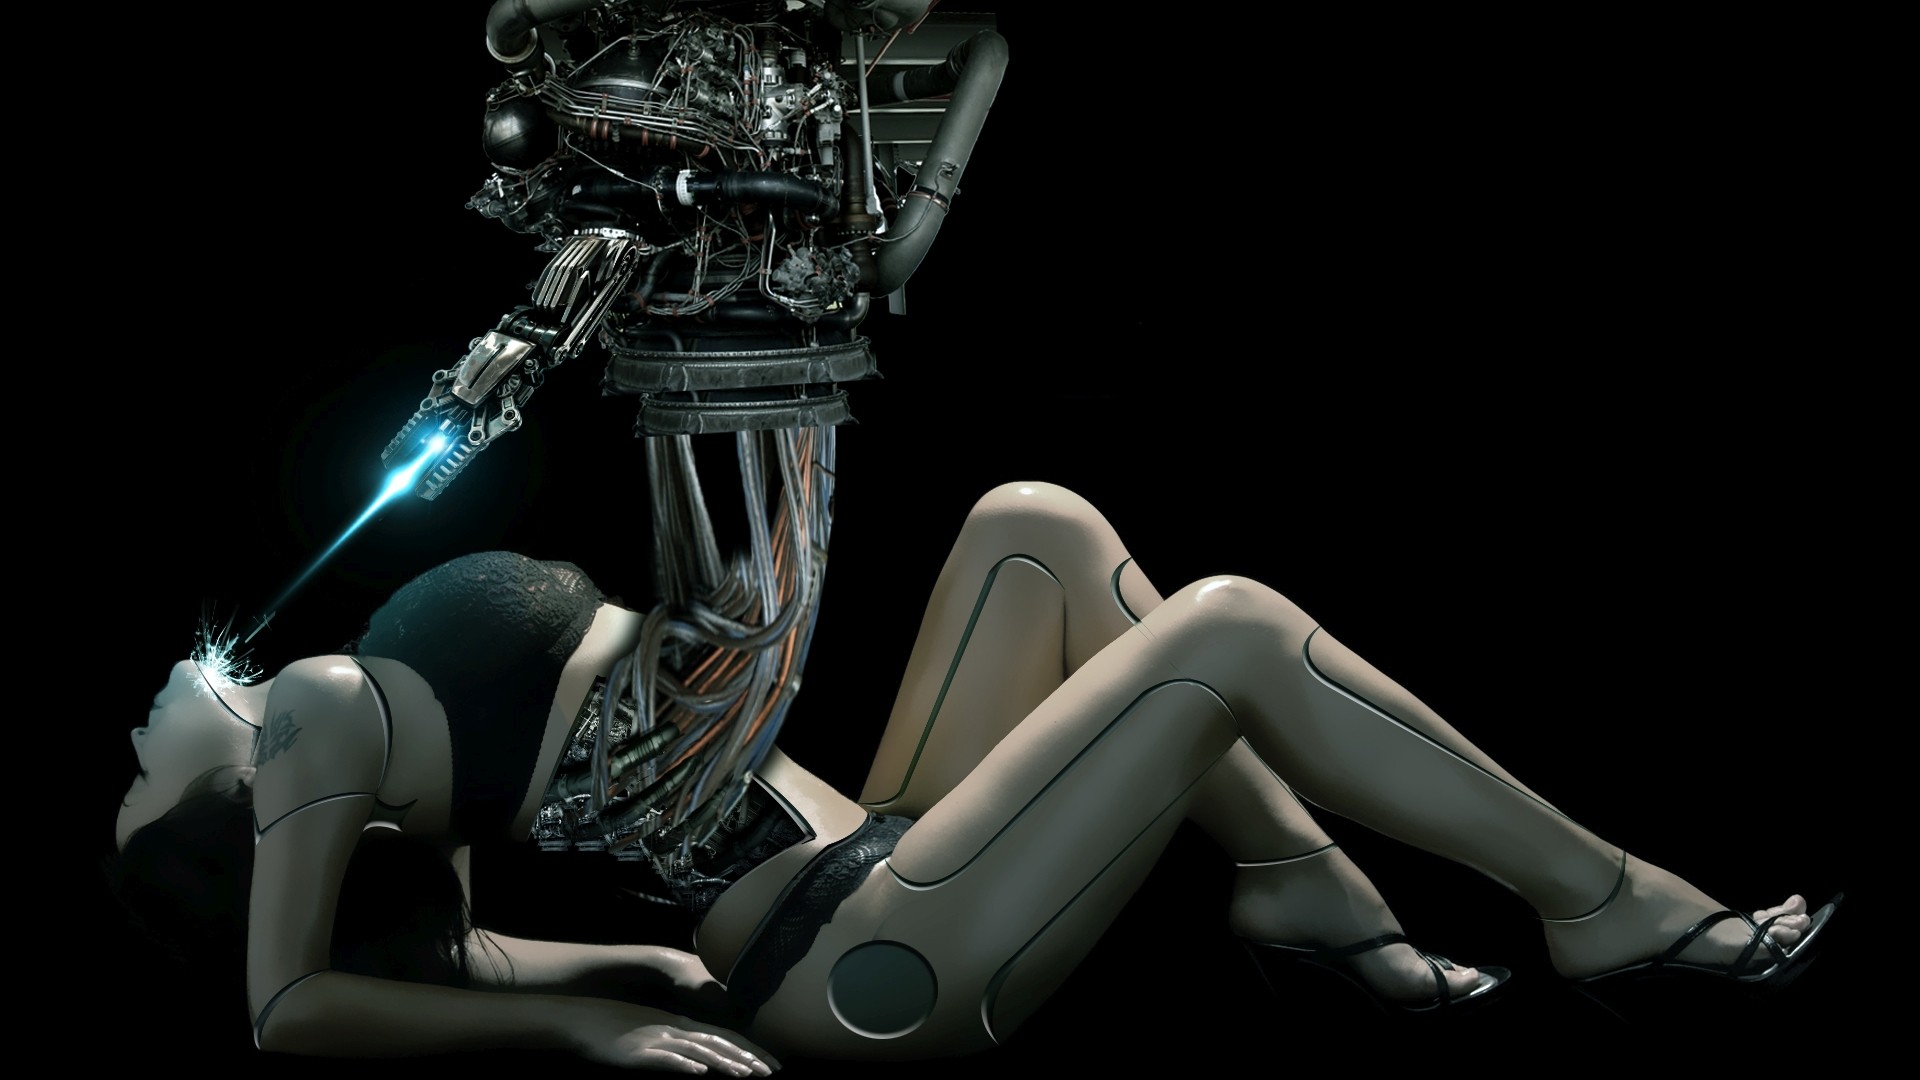 General 1920x1080 robot digital art CGI machine futuristic legs bra simple background women science fiction black background technology